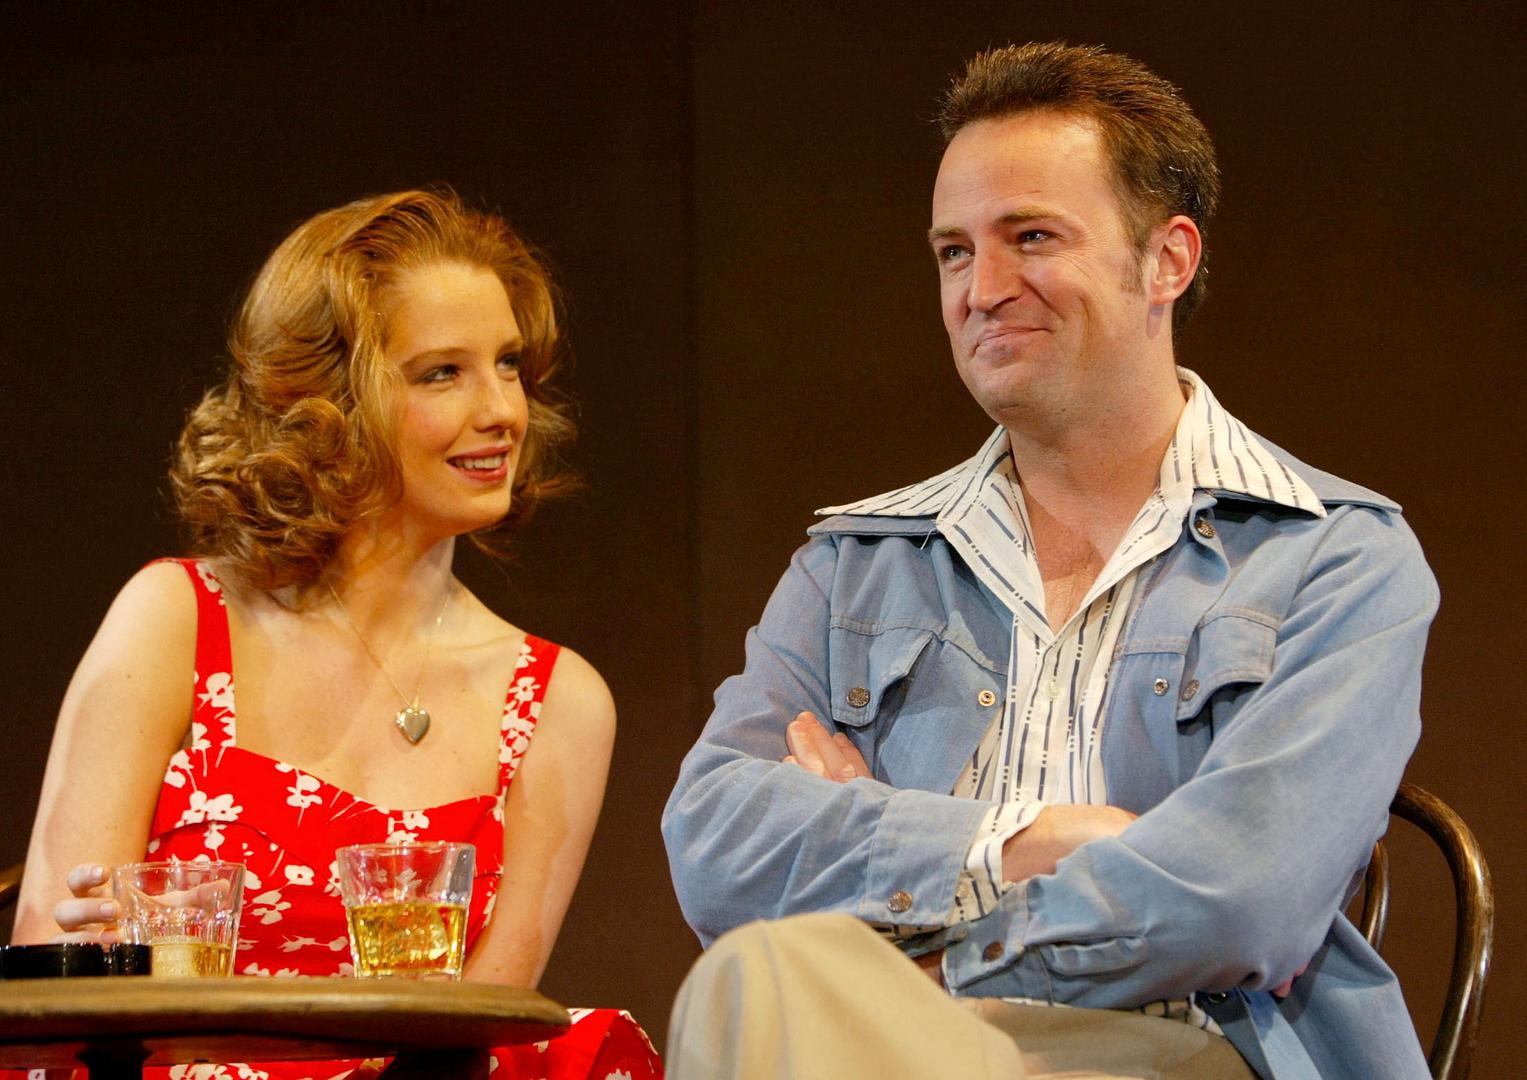 Glumac Matthew Perry i britanska glumica Kelly Reilly izvode scenu iz West End predstave 'Sexual Perversity in Chicago' u The Comedy Theatre u Londonu, 8. svibnja 2003. godine.